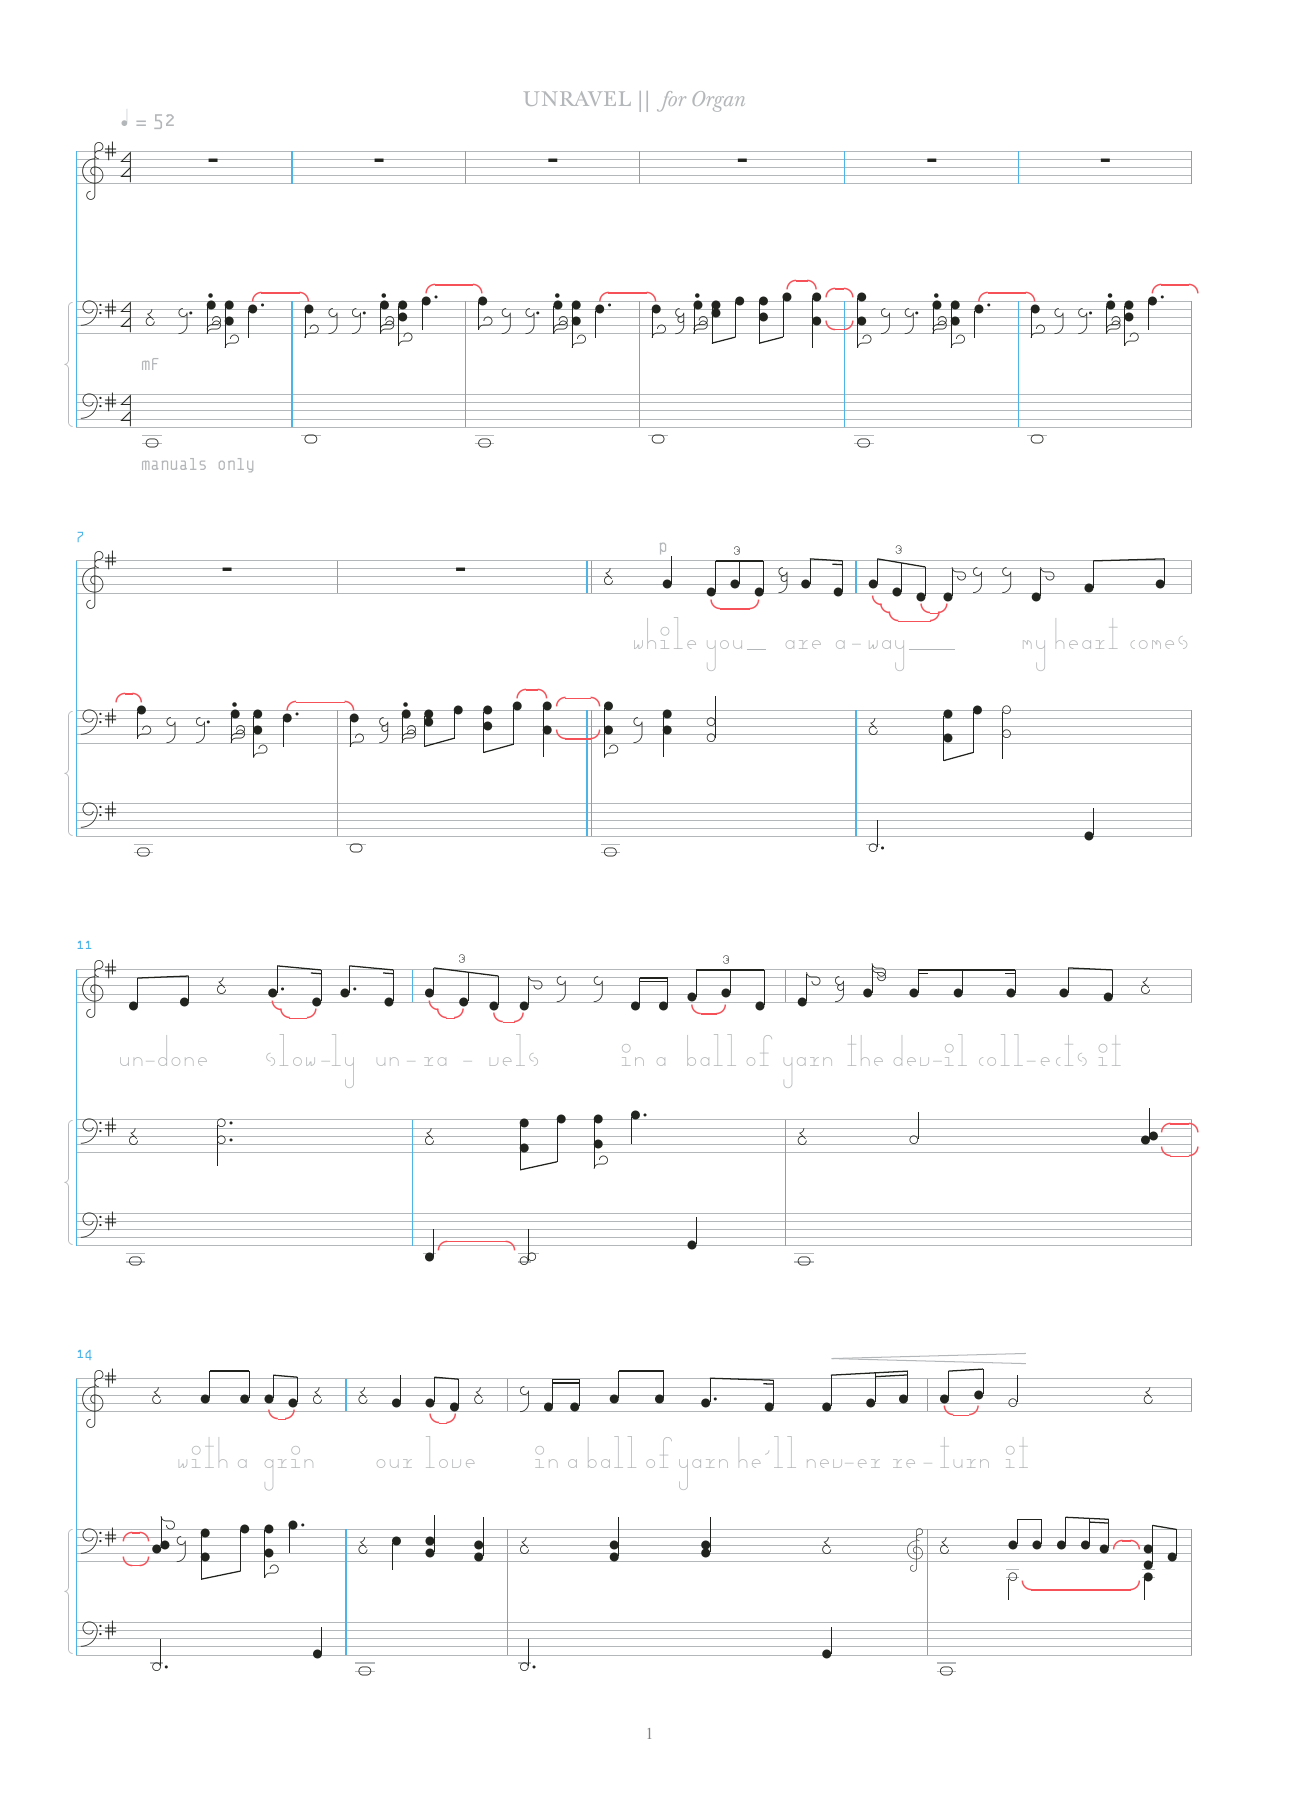 Bjork Unravel Sheet Music Notes & Chords for Organ & Vocal - Download or Print PDF